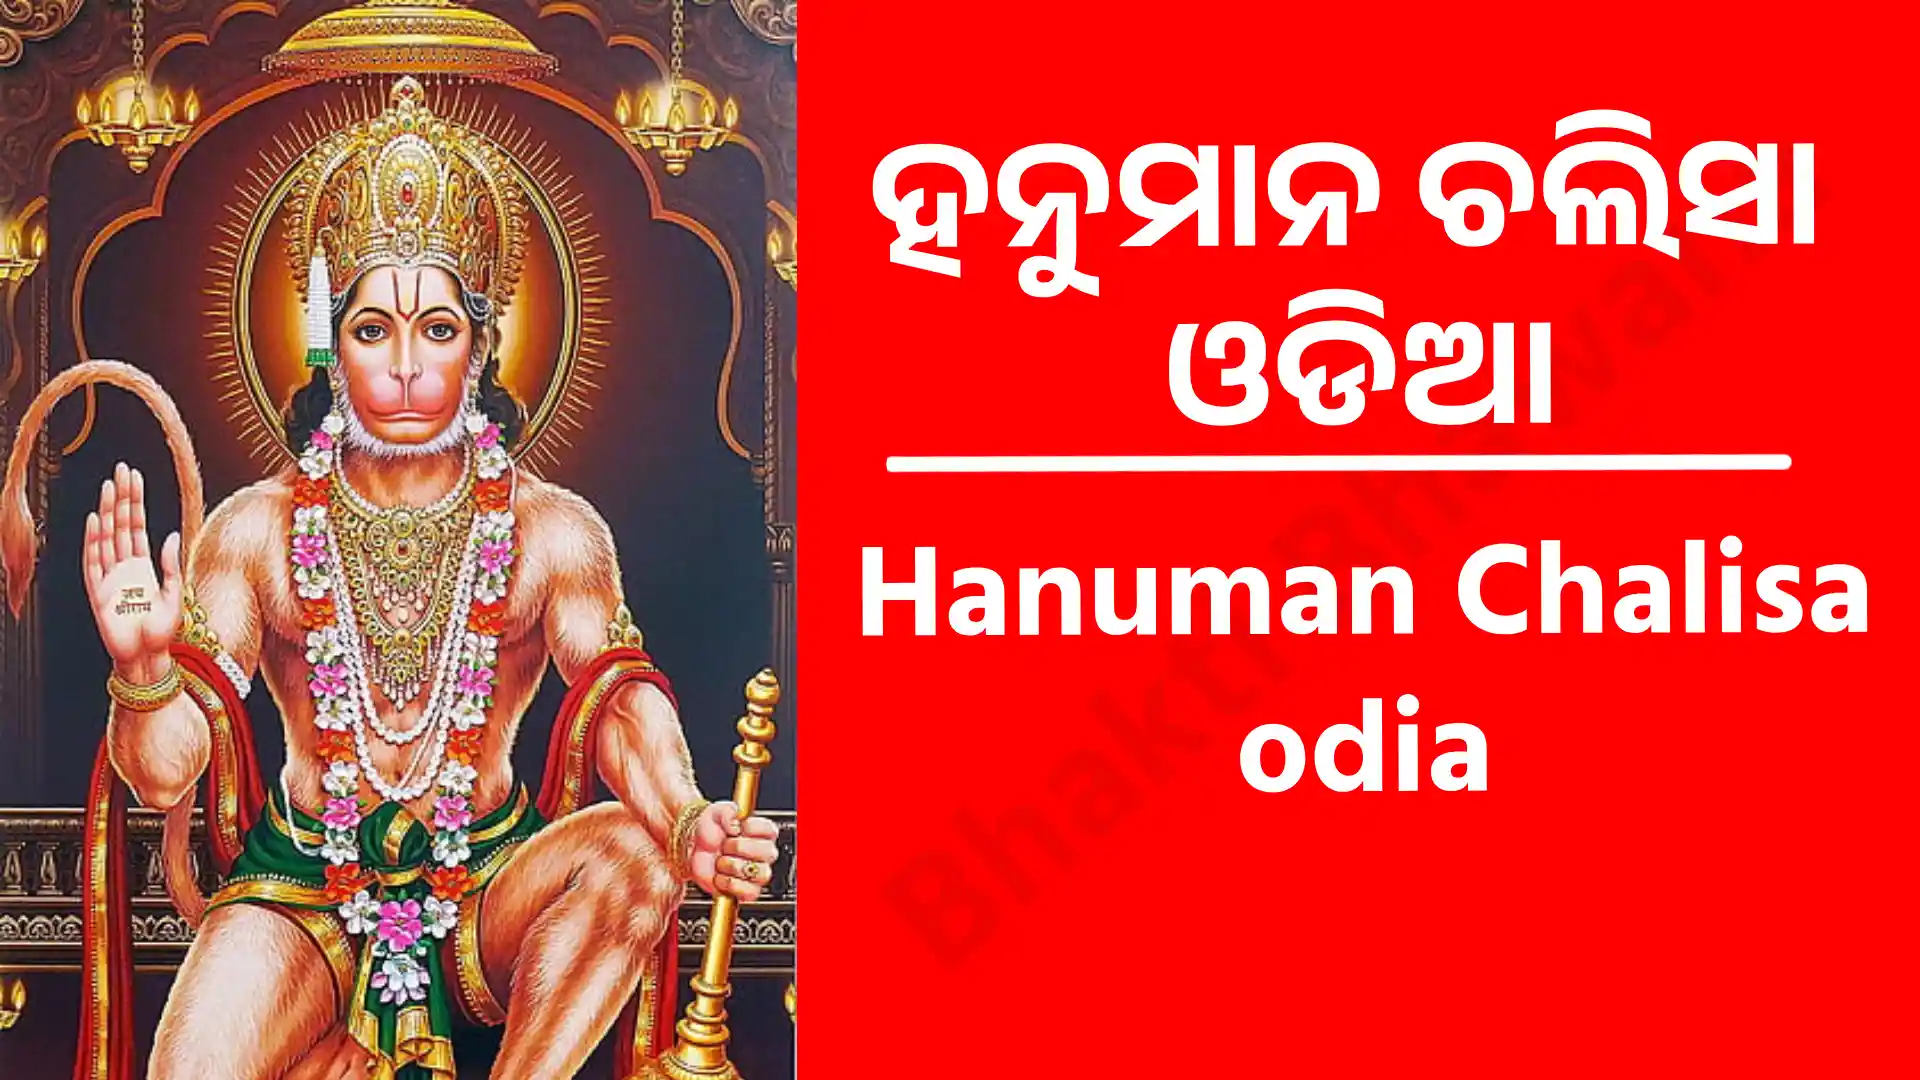 Hanuman Chalisa odia